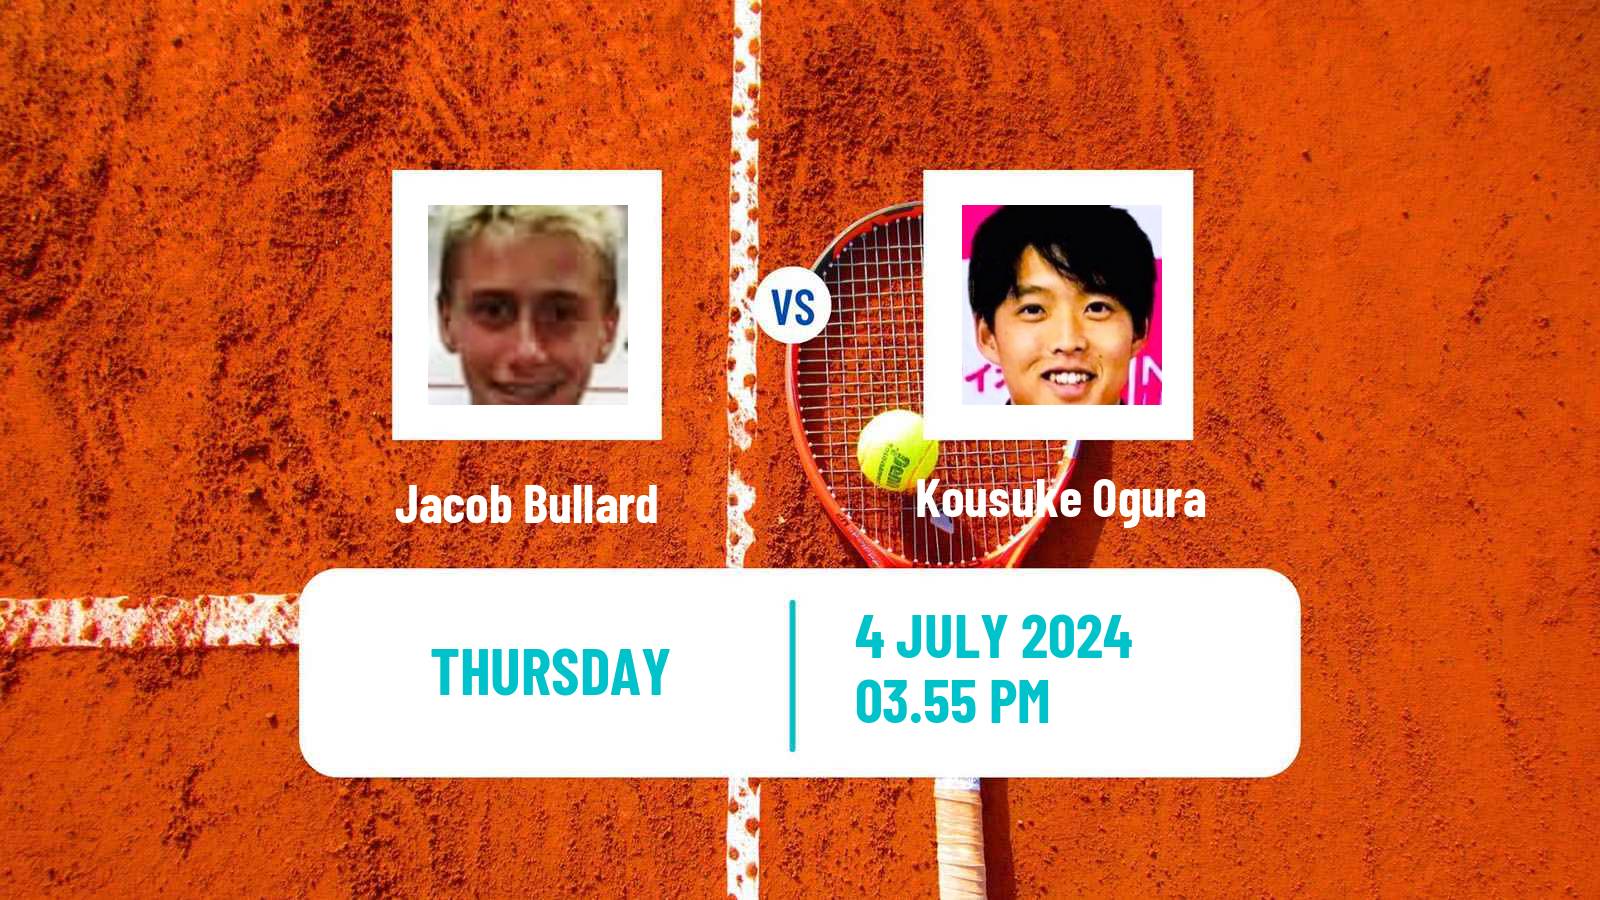 Tennis ITF M15 Lakewood Ca Men Jacob Bullard - Kousuke Ogura